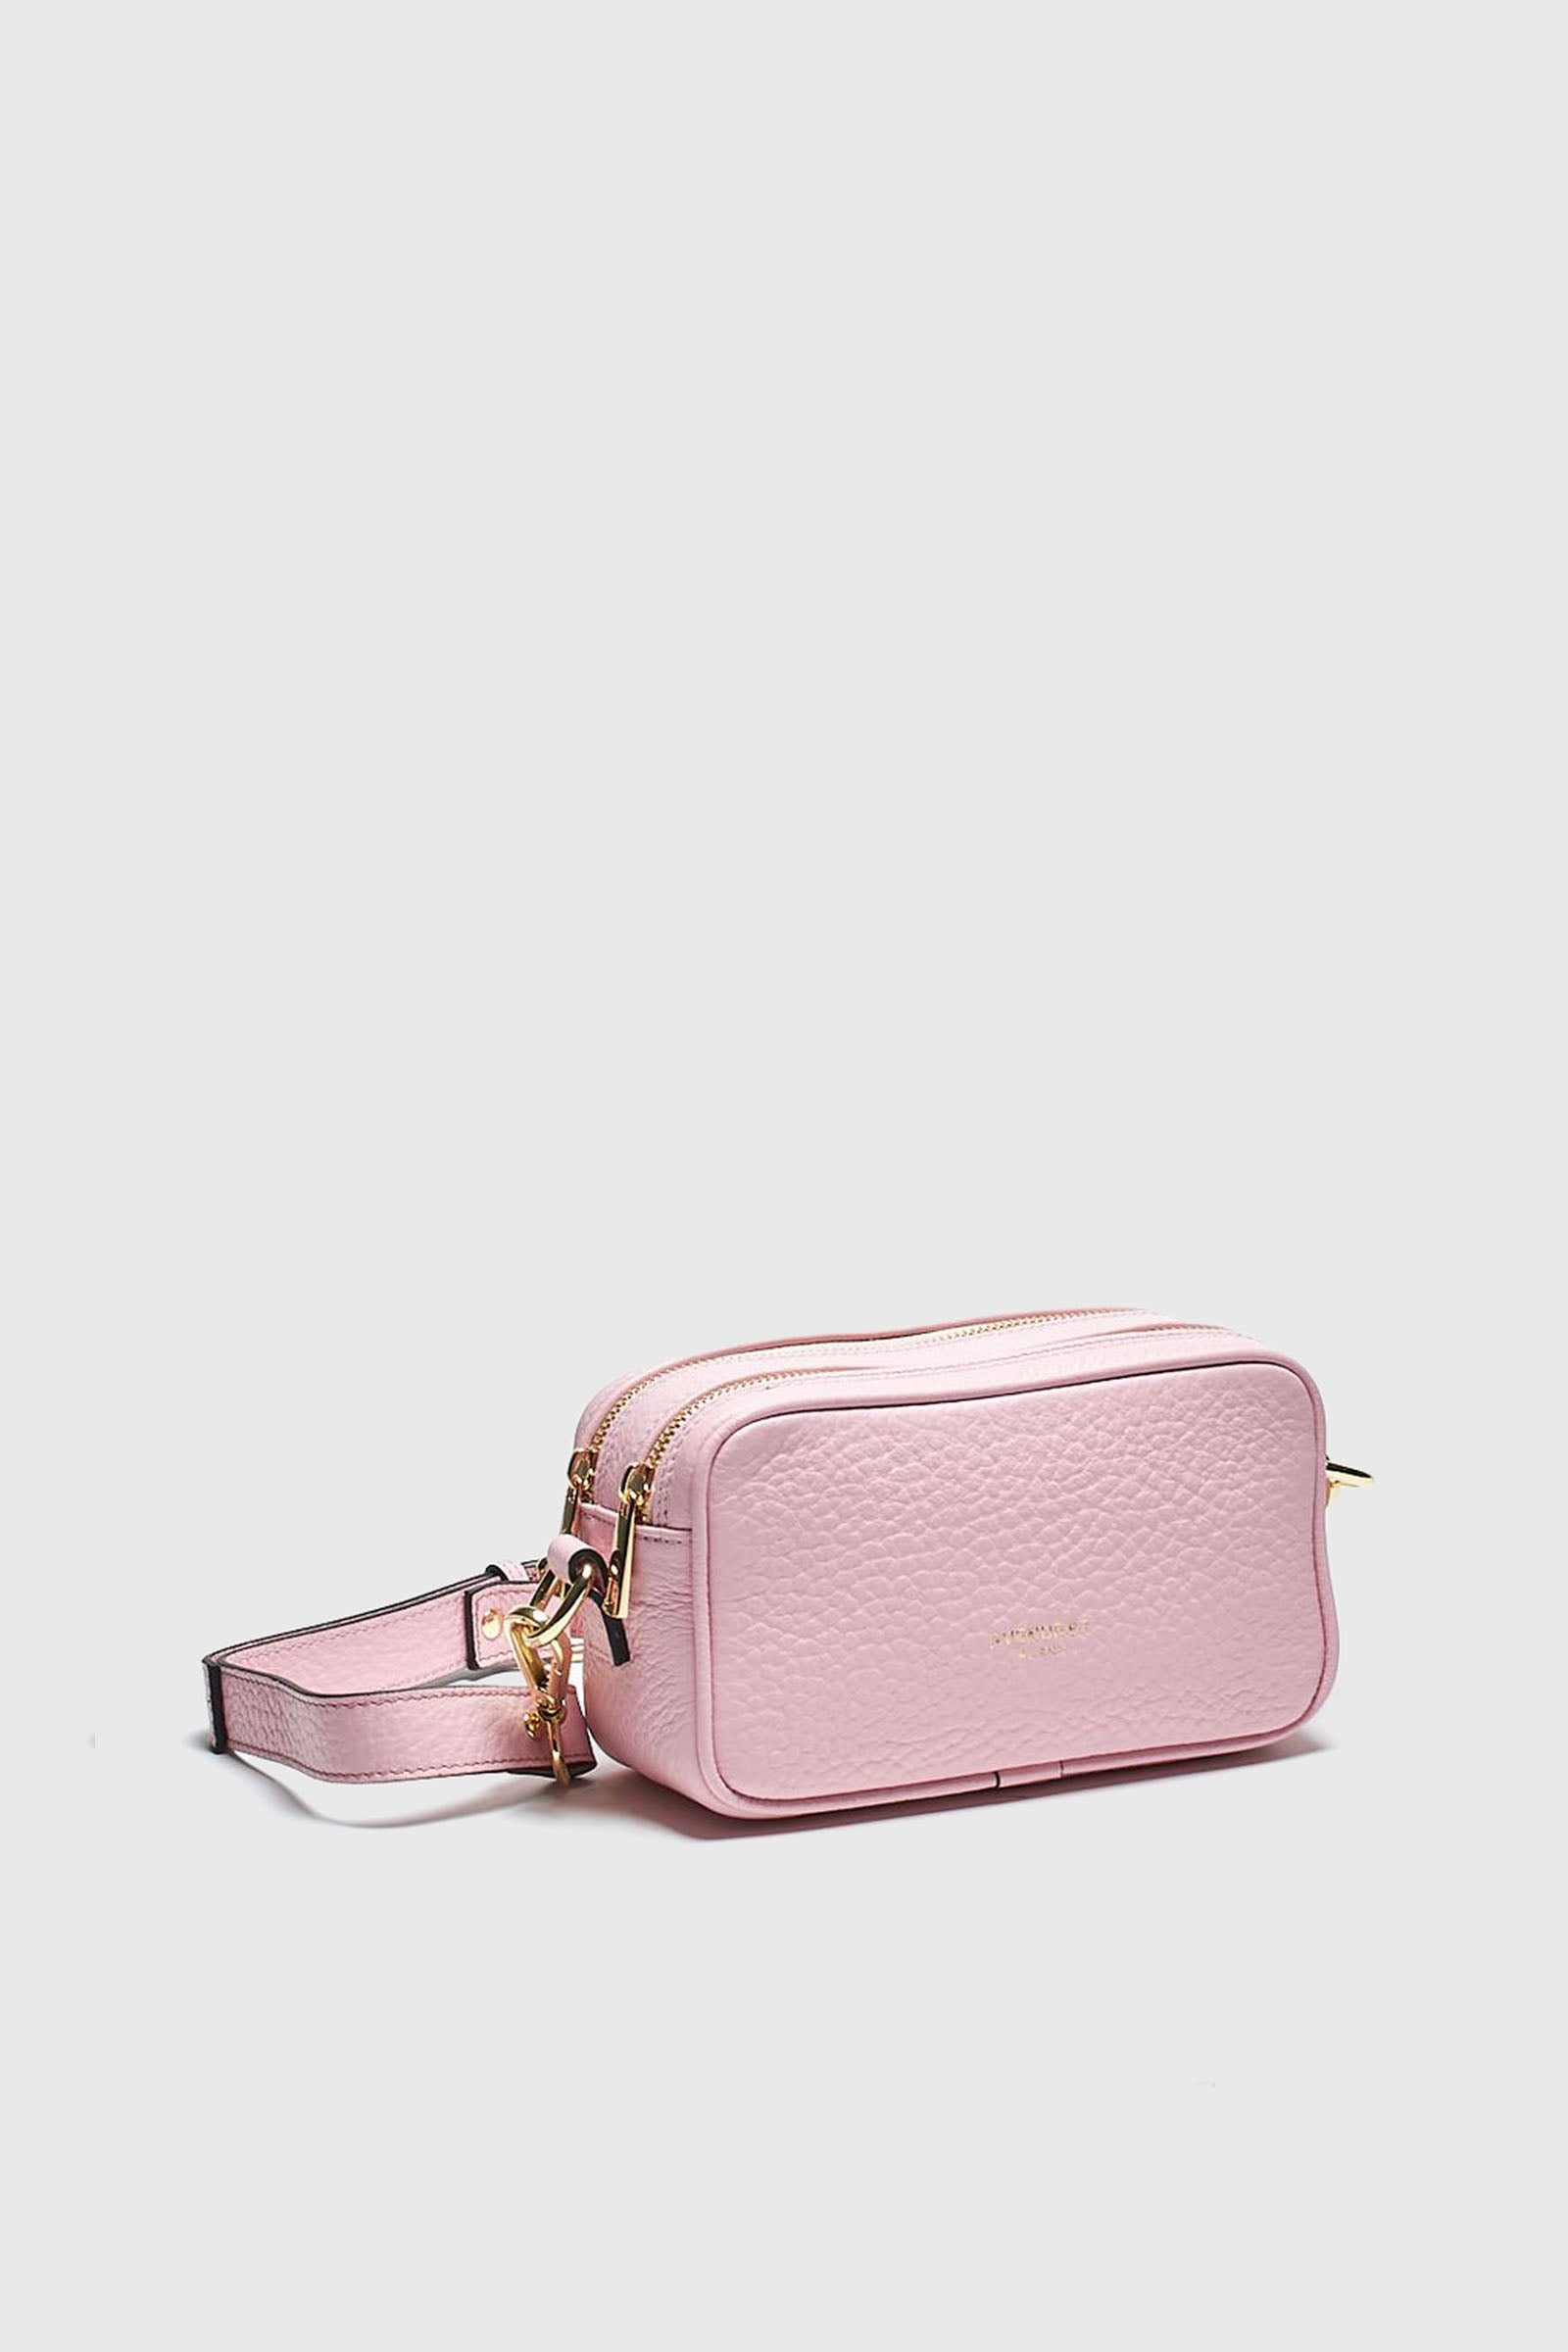 Avenue 67 Gabrielle Leather Bag Pink - 3